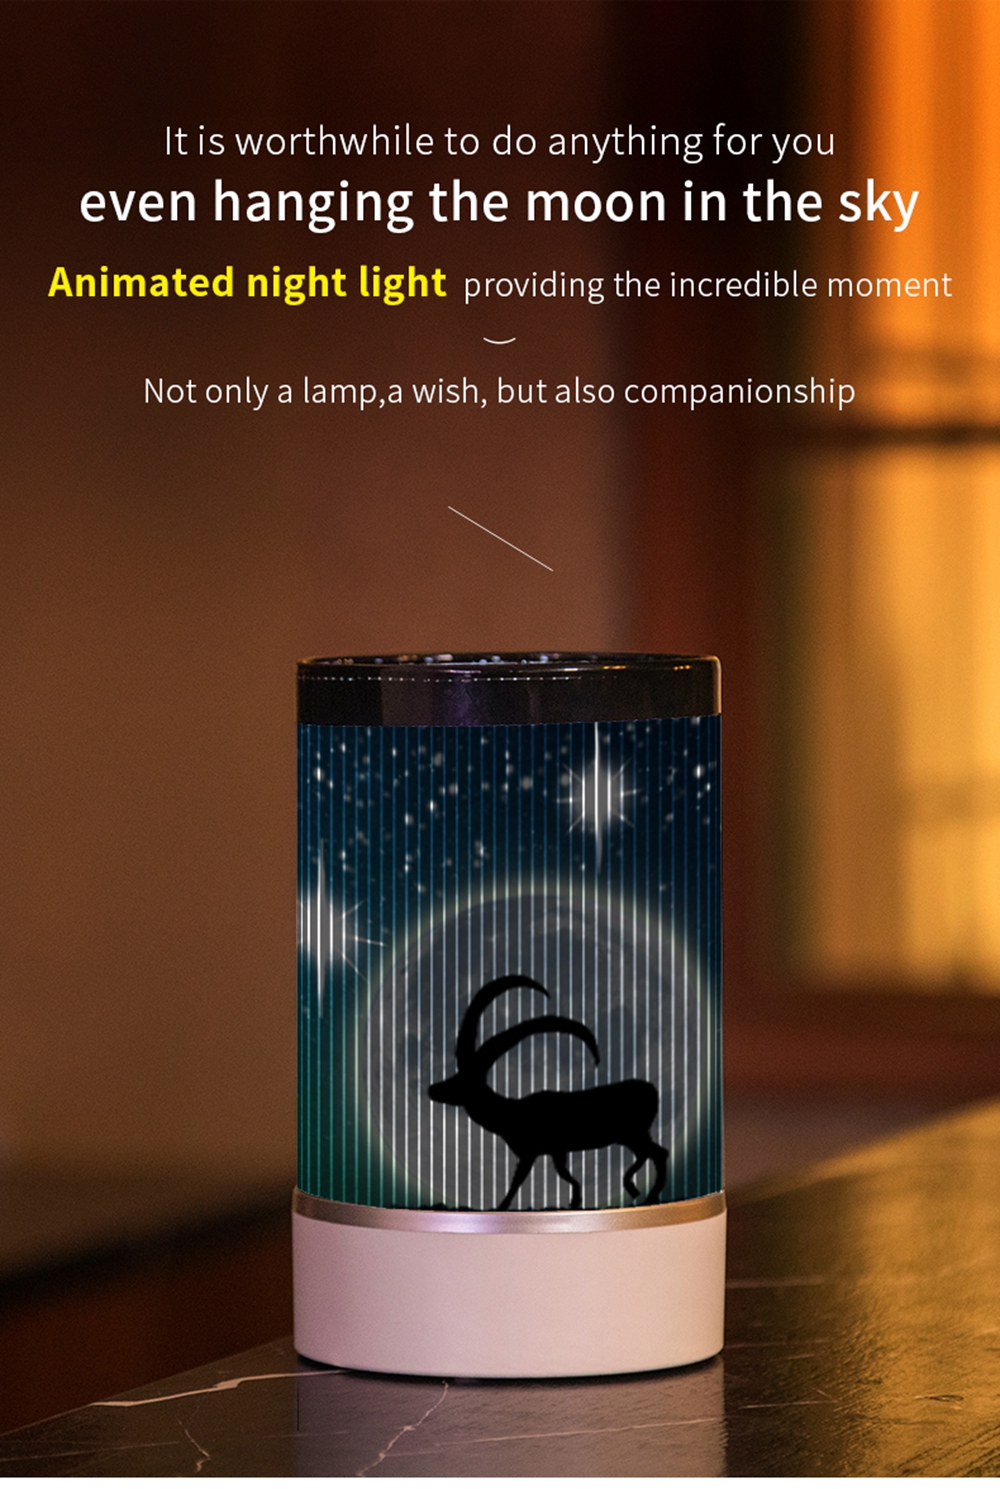 DC5V USB LED 4 Pattern Animated Night Light Remote Control for Kids Bedroom